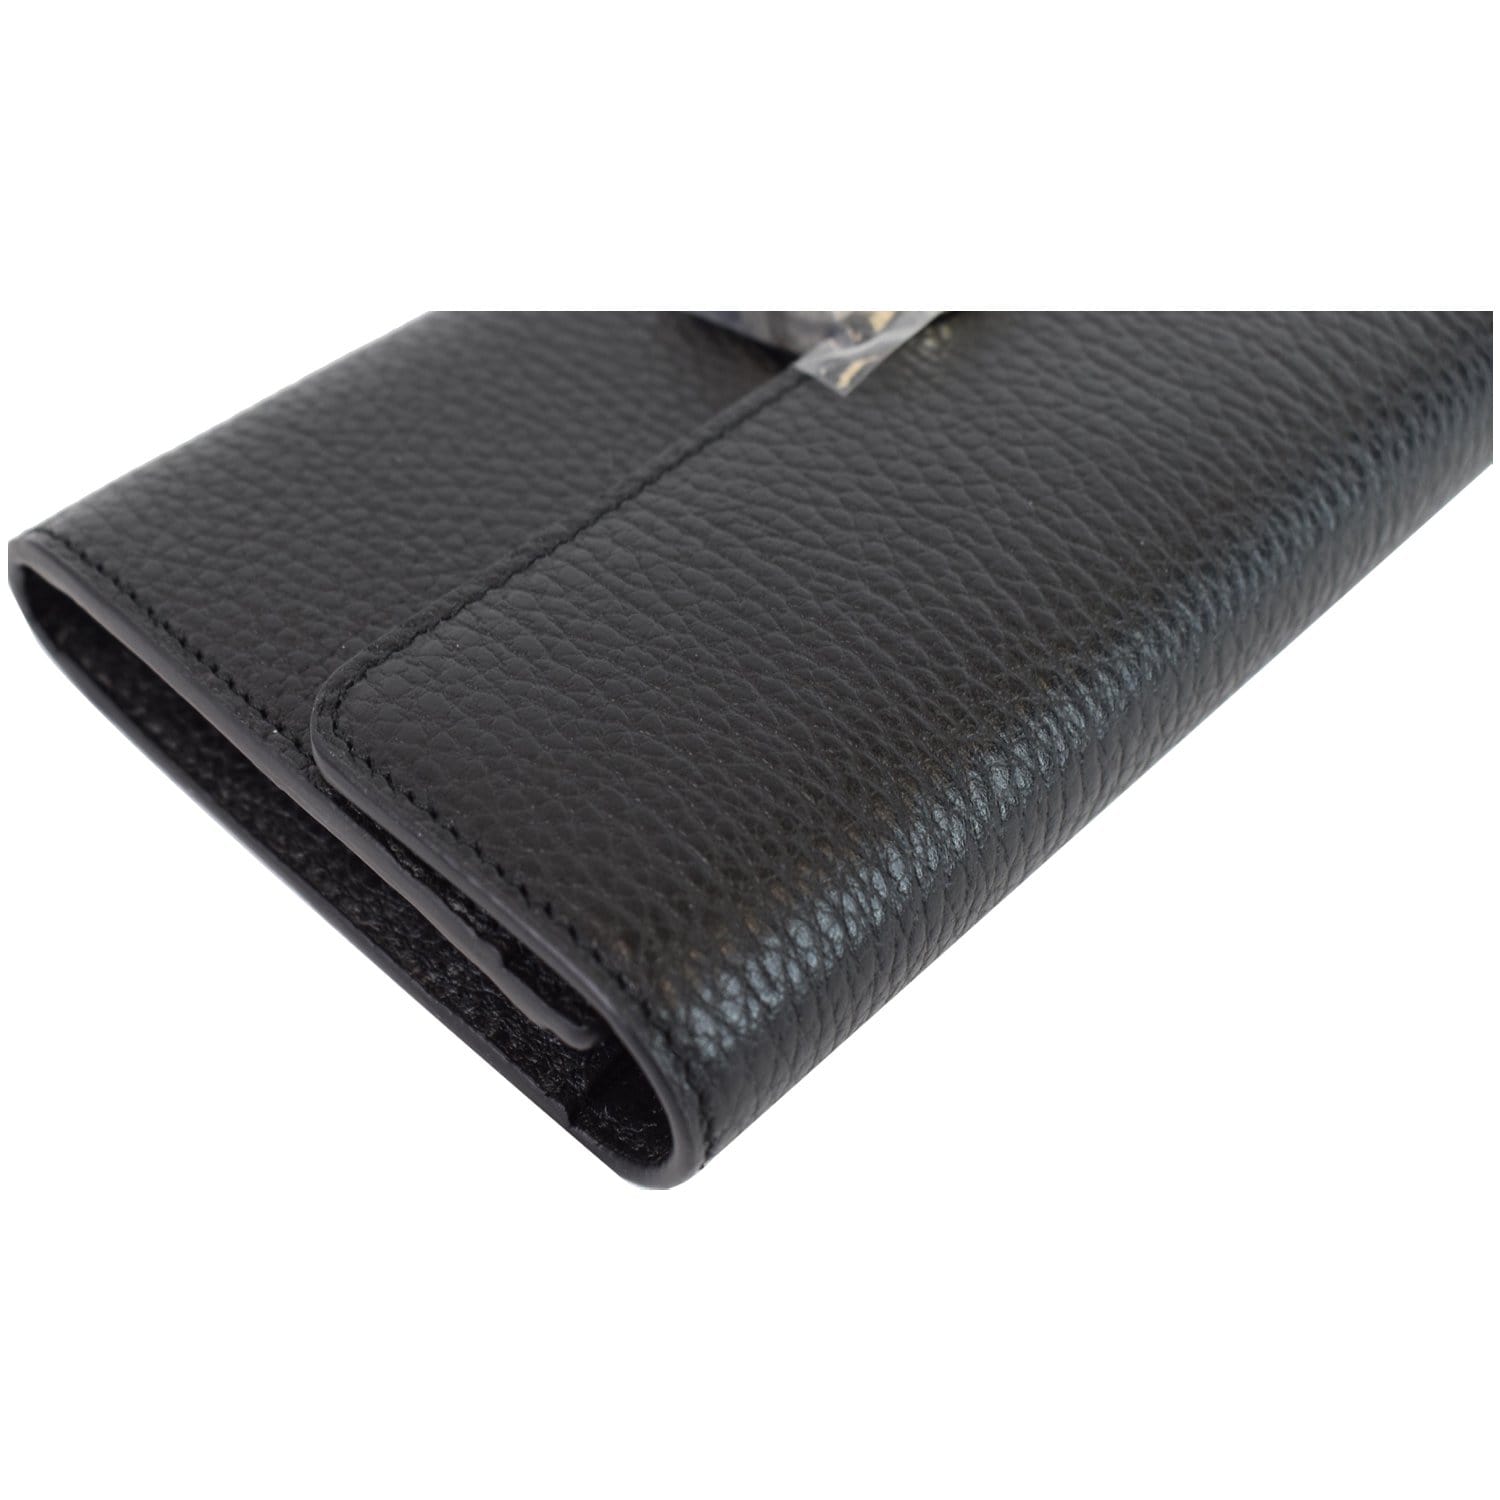 Gucci GG Interlocking Continental Leather Wallet Black 598166